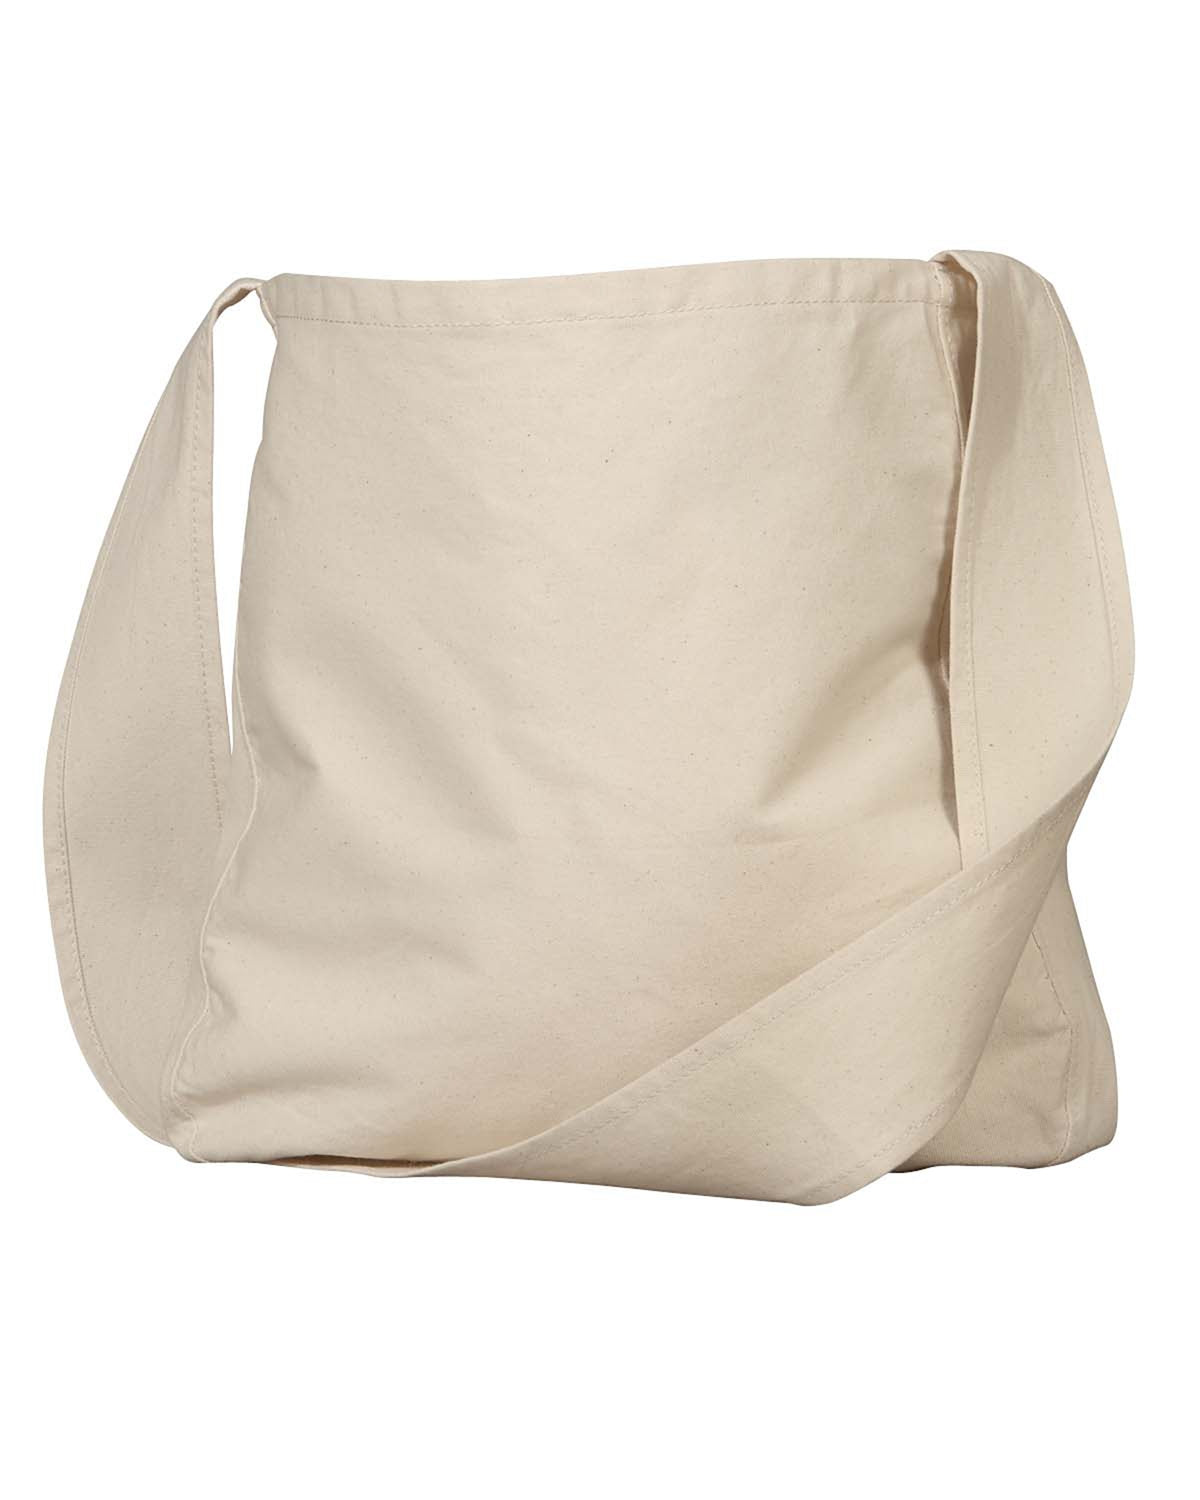 Customizable Econscious Farmer's Market Bag